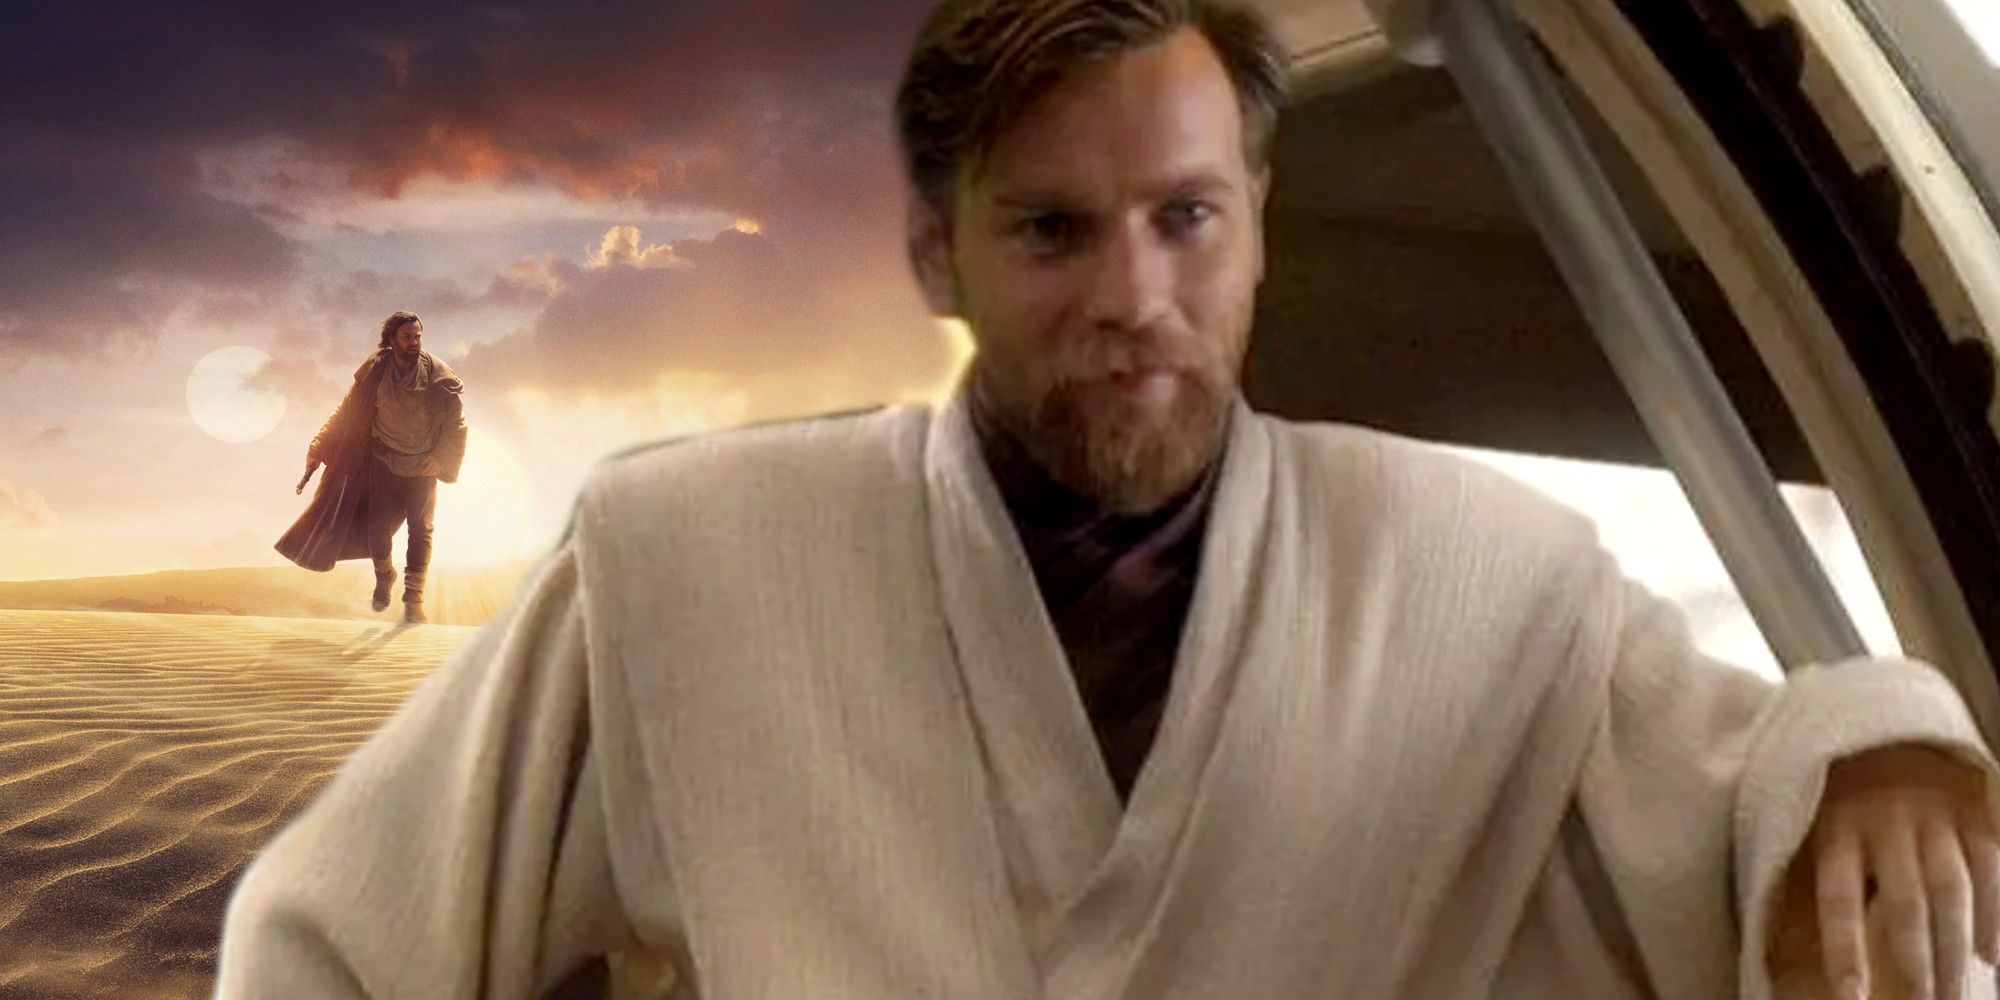 Obi-Wan Kenobi Ewan McGregor as Obi-Wan Kenobi posible future return